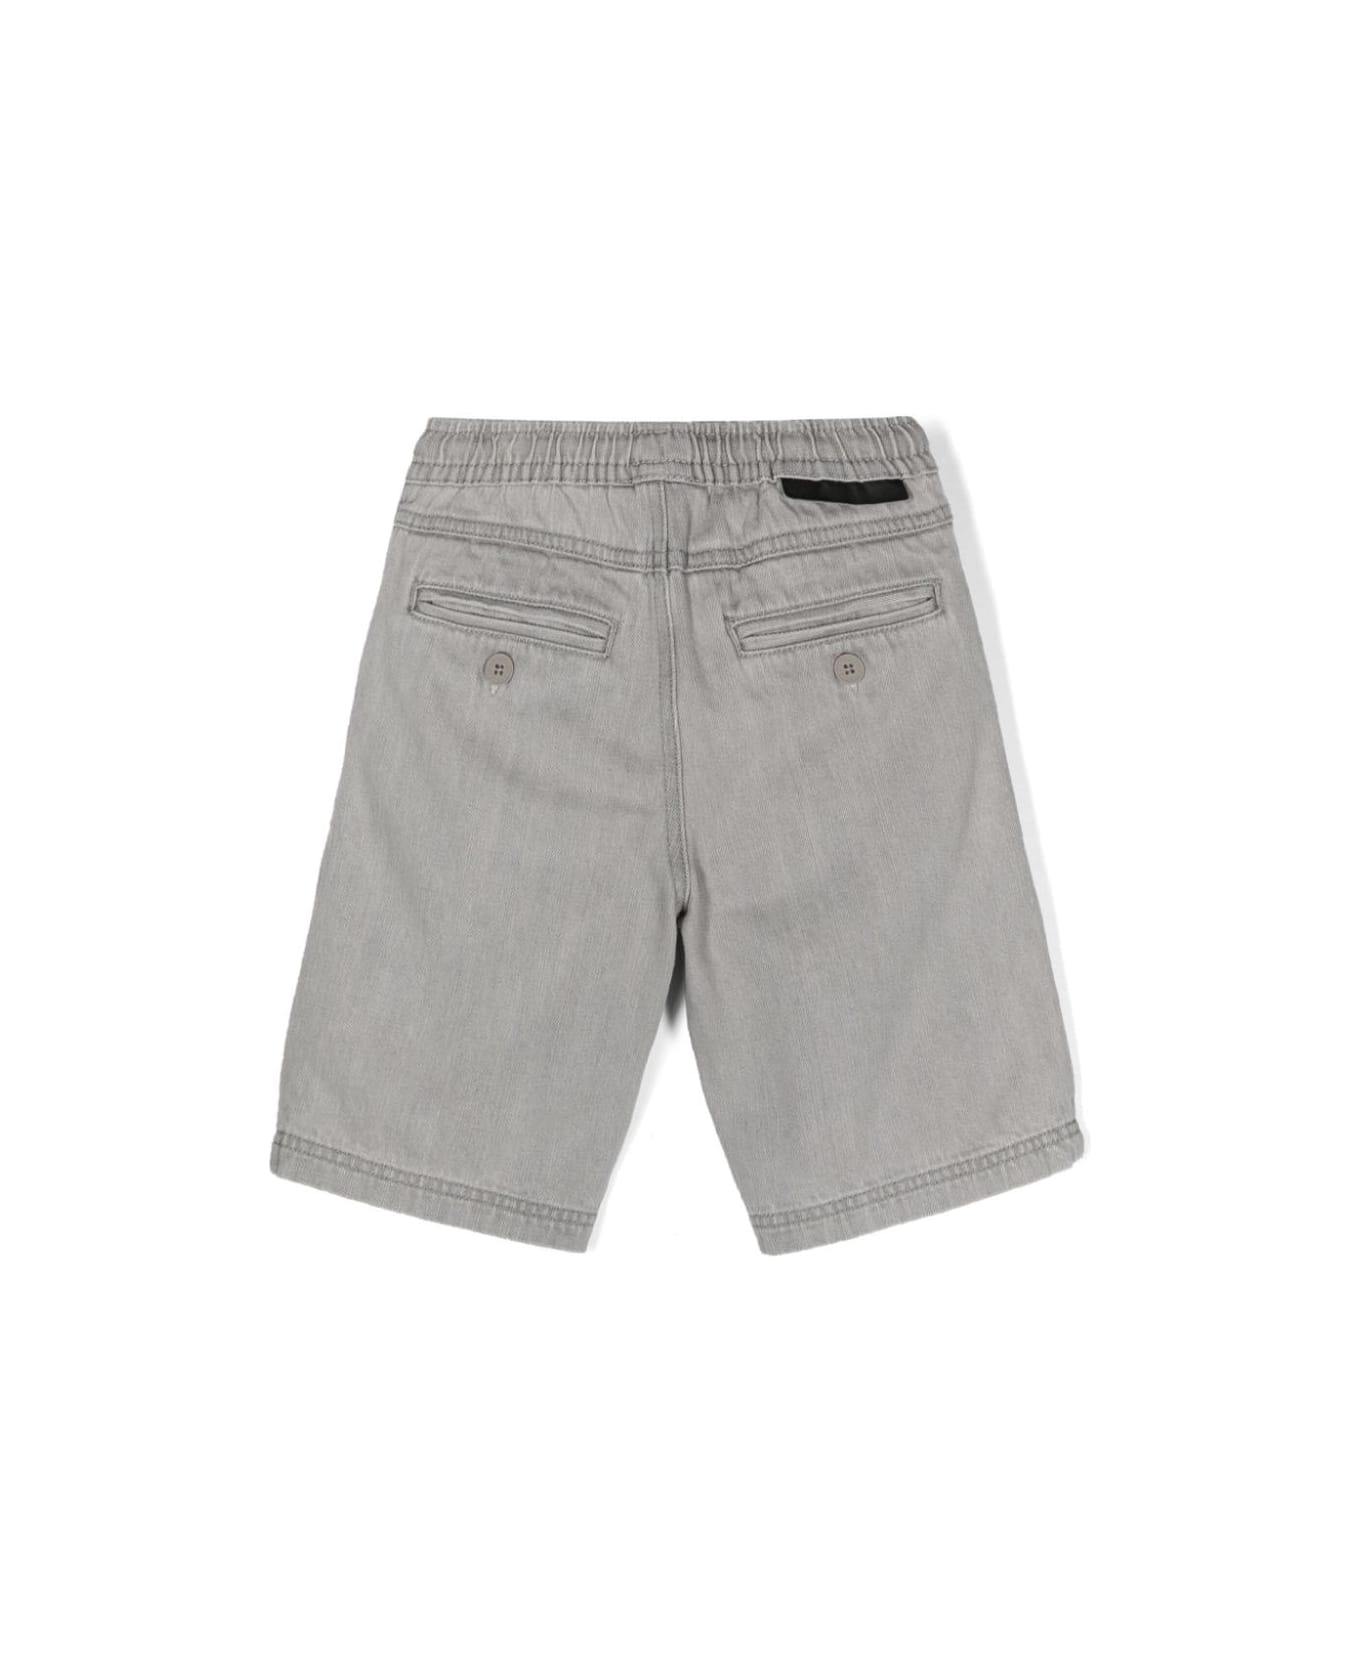 Stella McCartney Kids Grey Cotton Bermuda Shorts - Grey